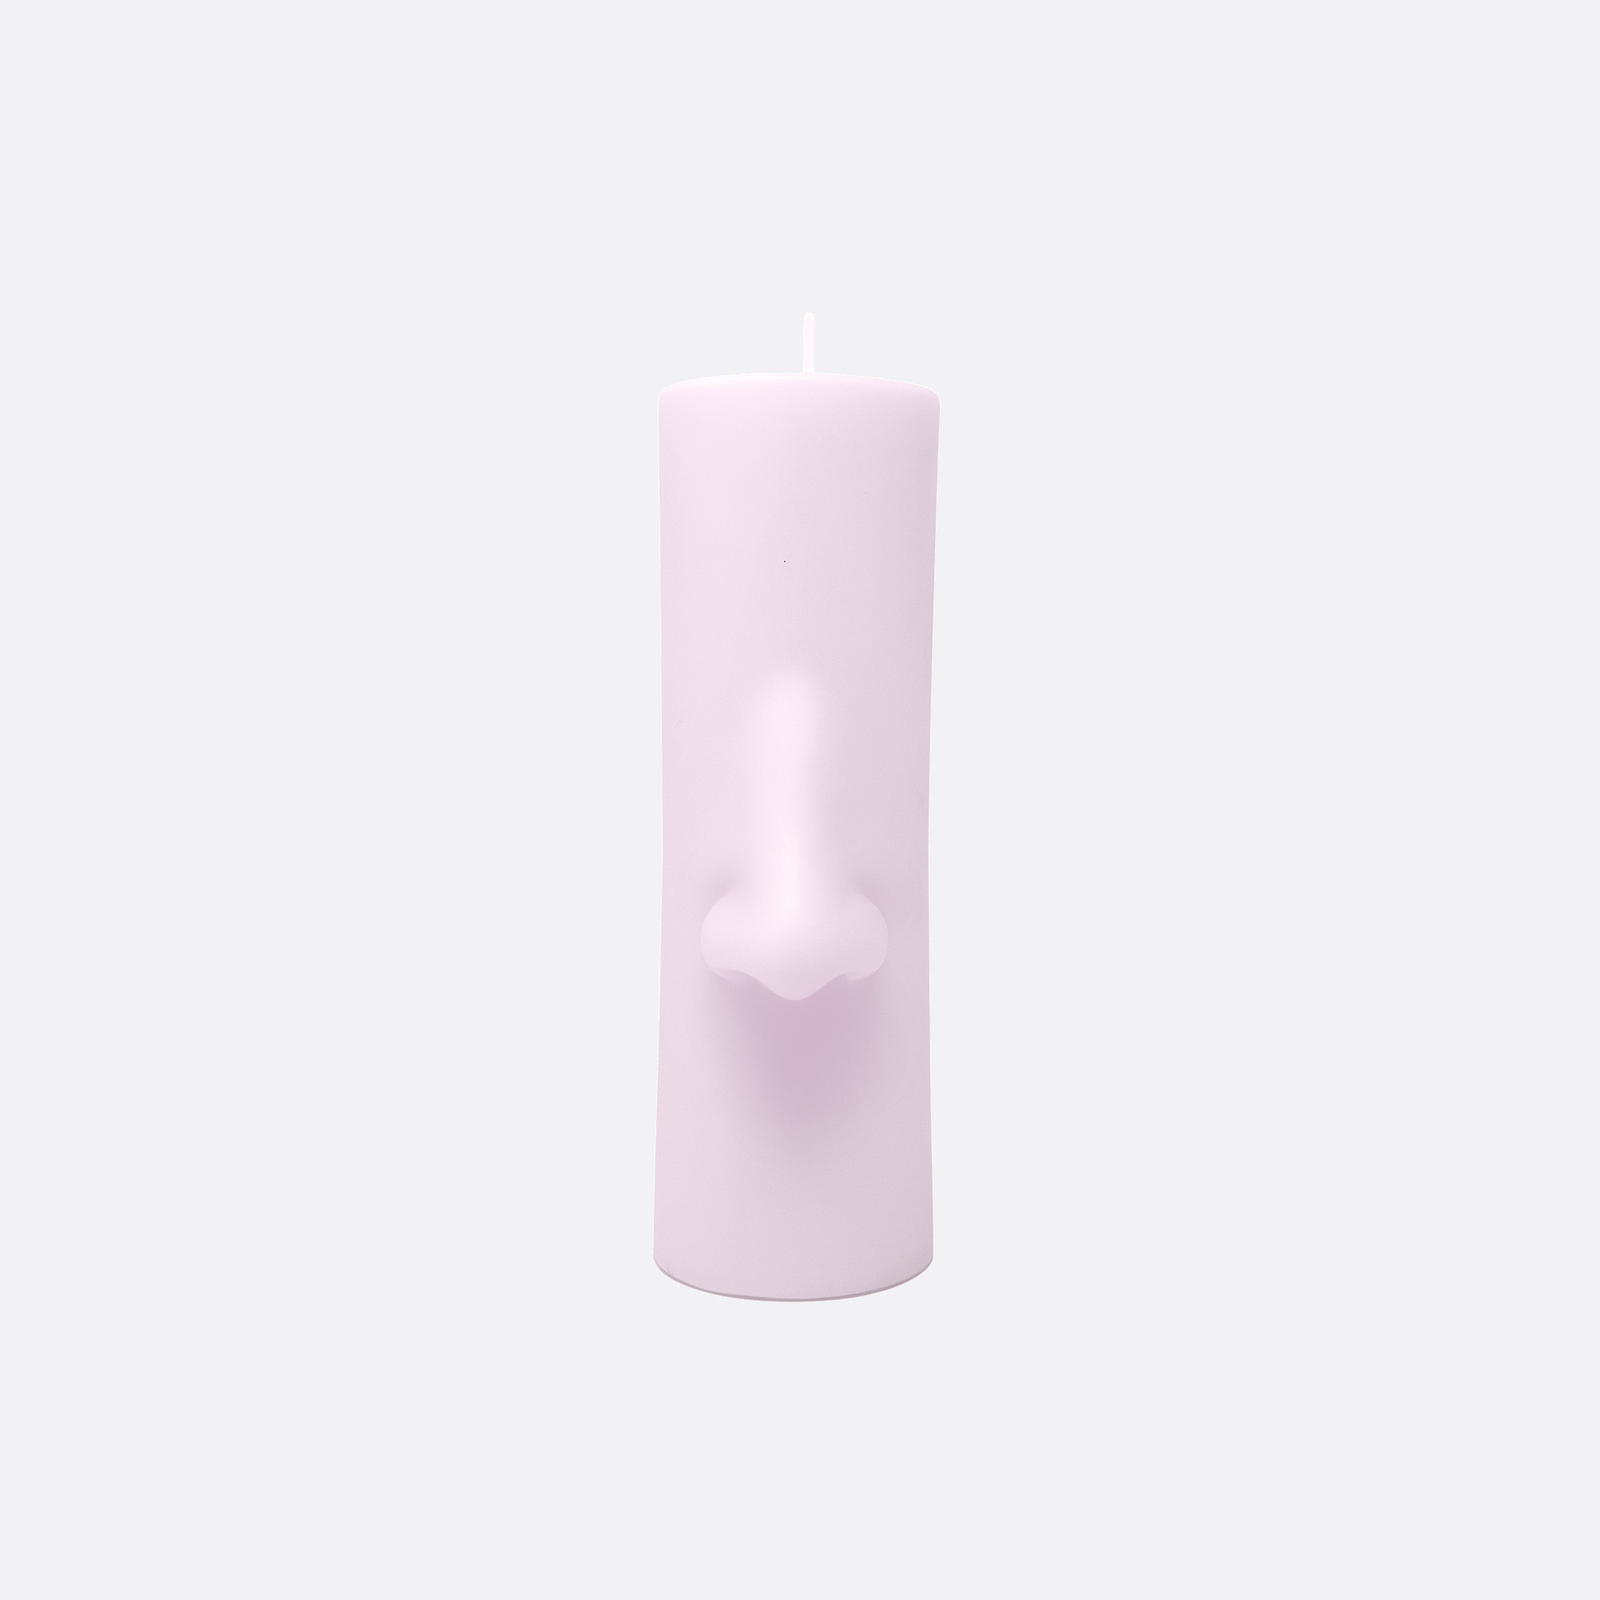 Nose Form Candle, lavender